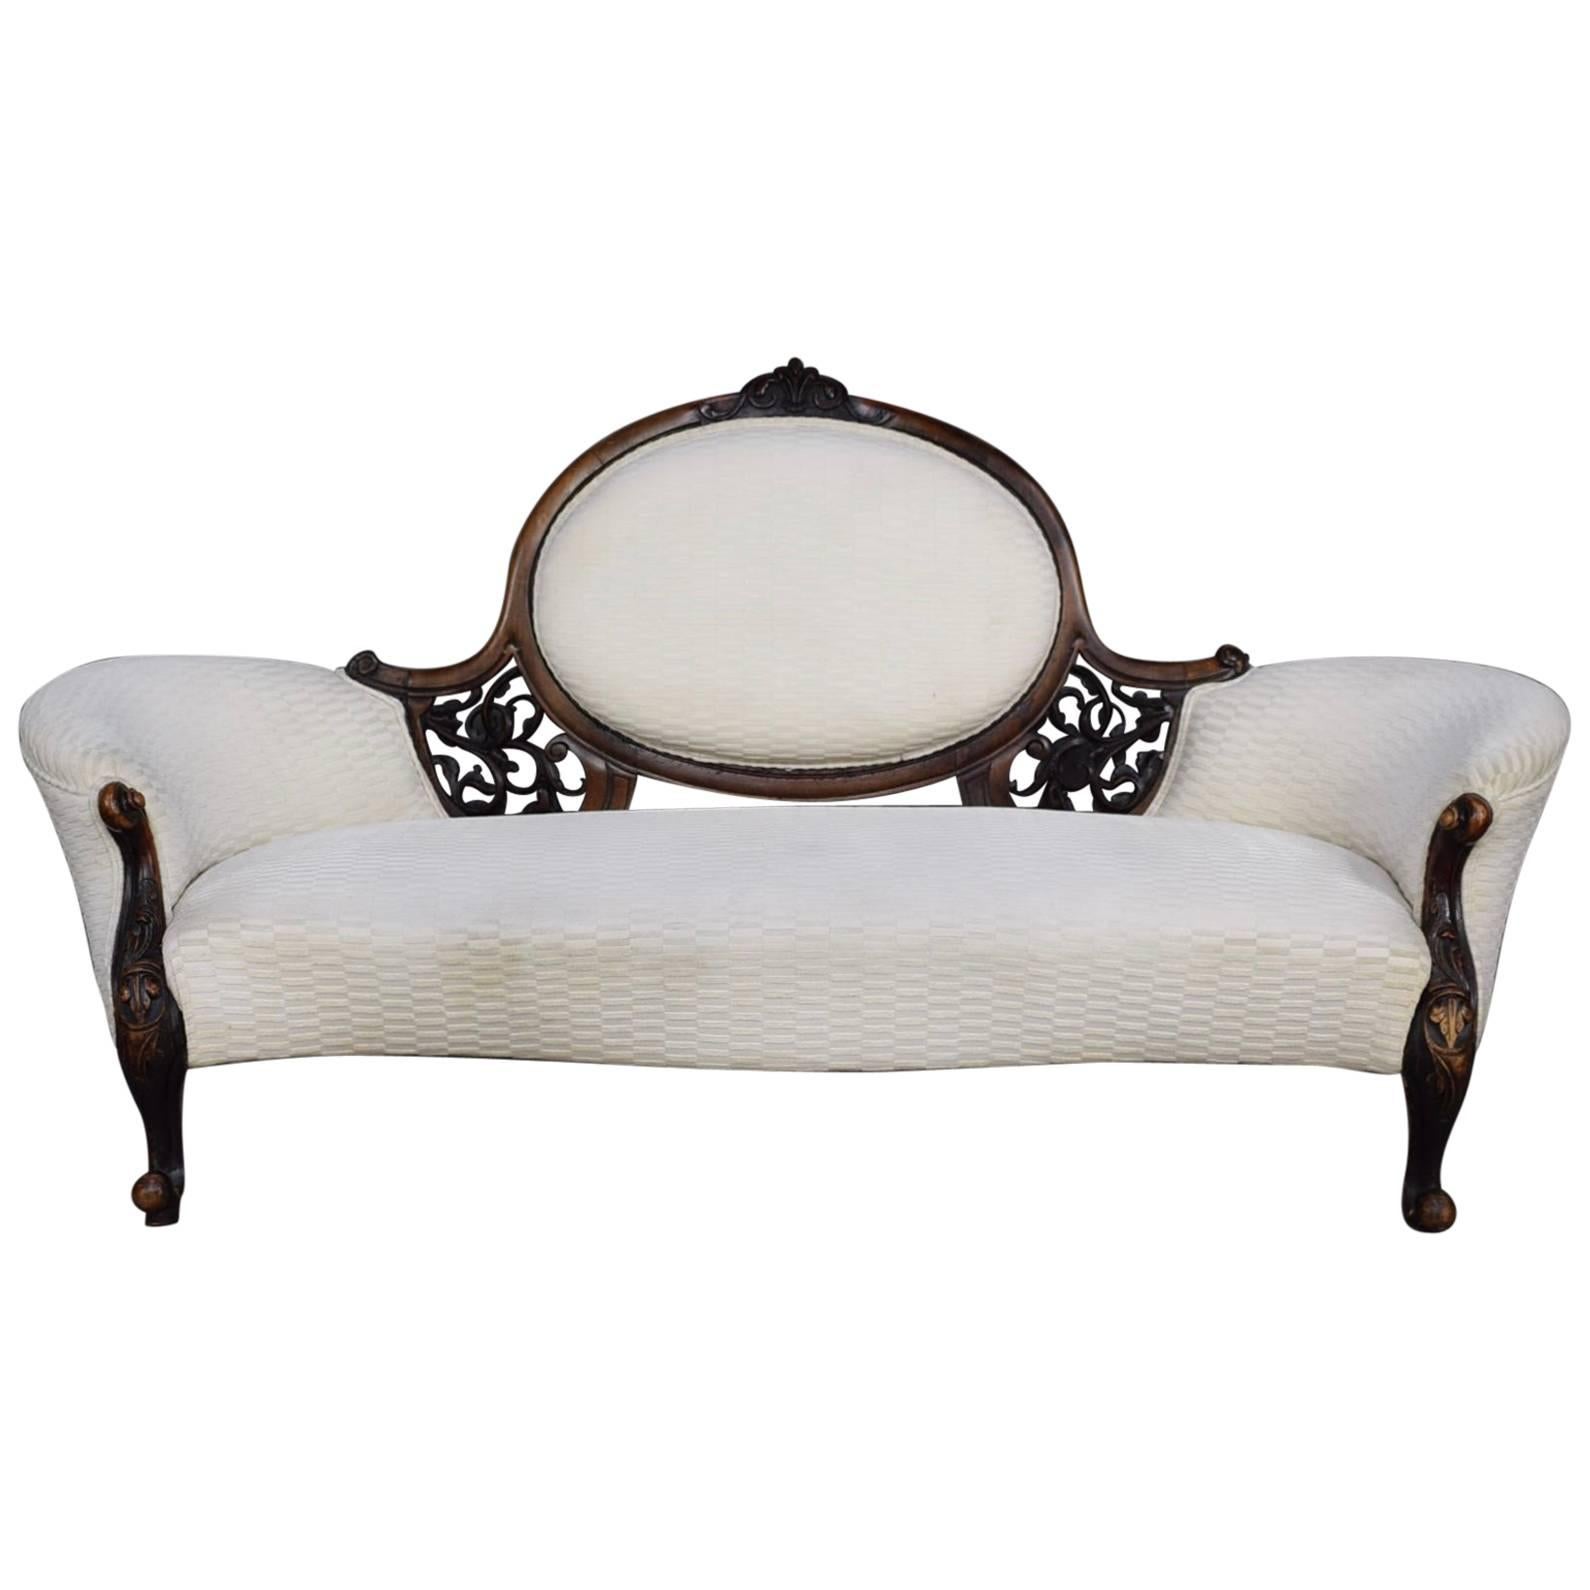 Victorian Antique Chaise Longue Love Seat Sofa, 18th-19th Century